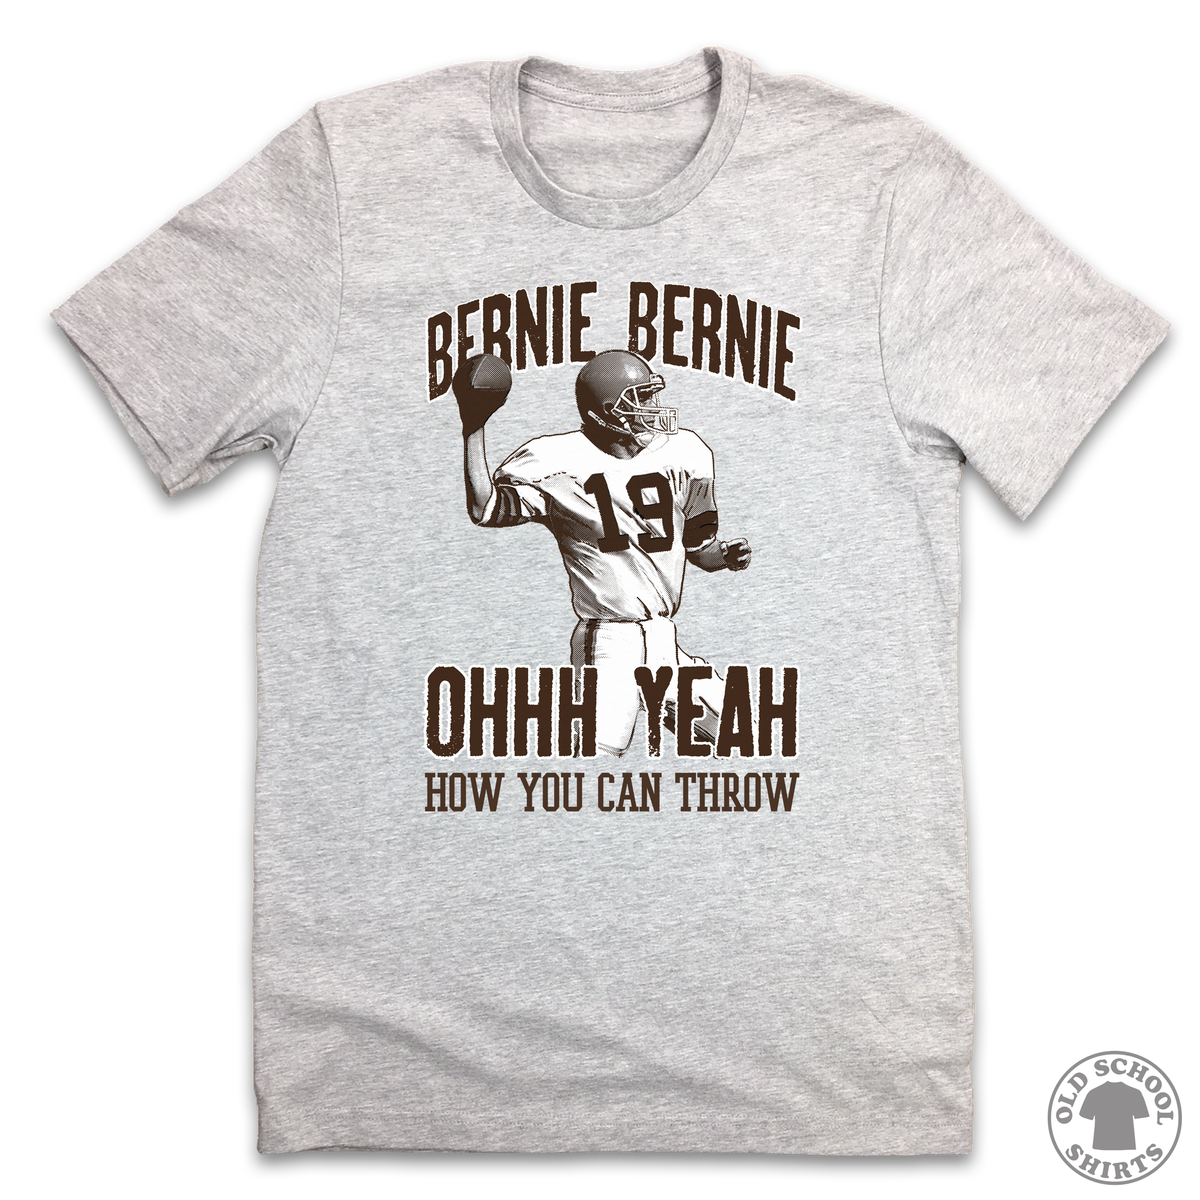 Bernie Bernie Ohhh Yeah - Old School Shirts- Retro Sports T Shirts